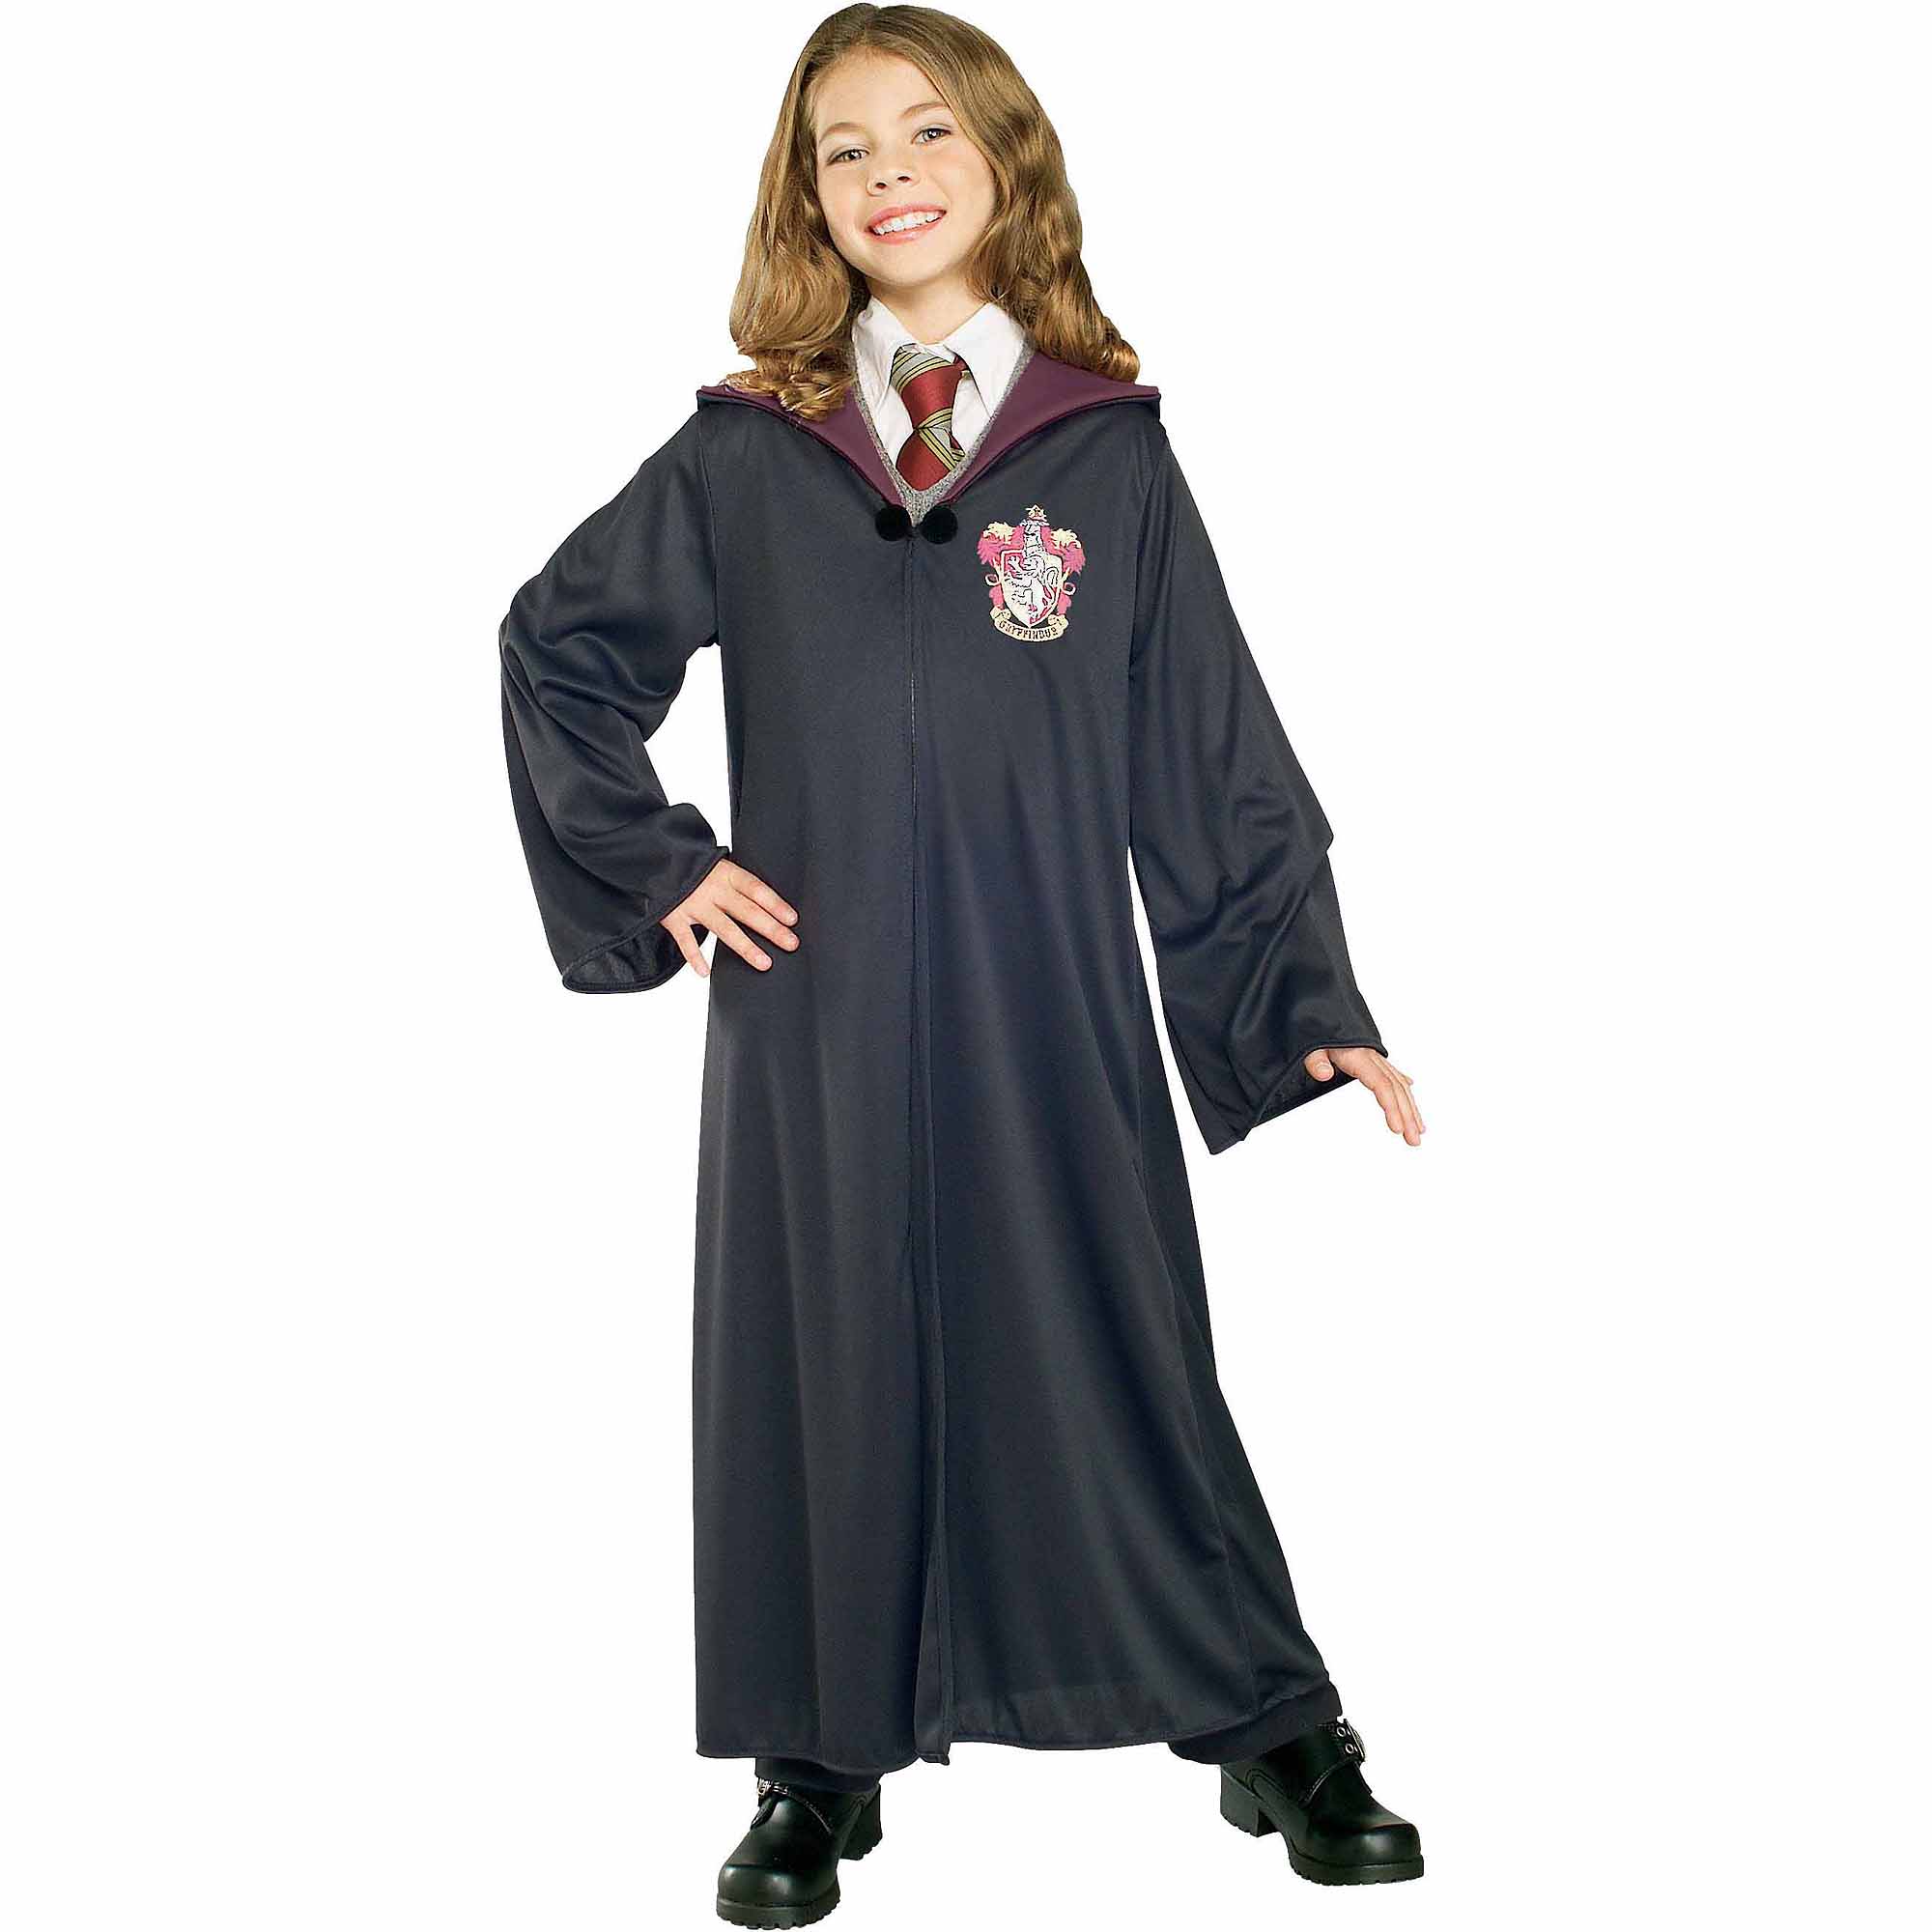 Harry Potter Gryffindor Robe Child Halloween Costume - image 1 of 2